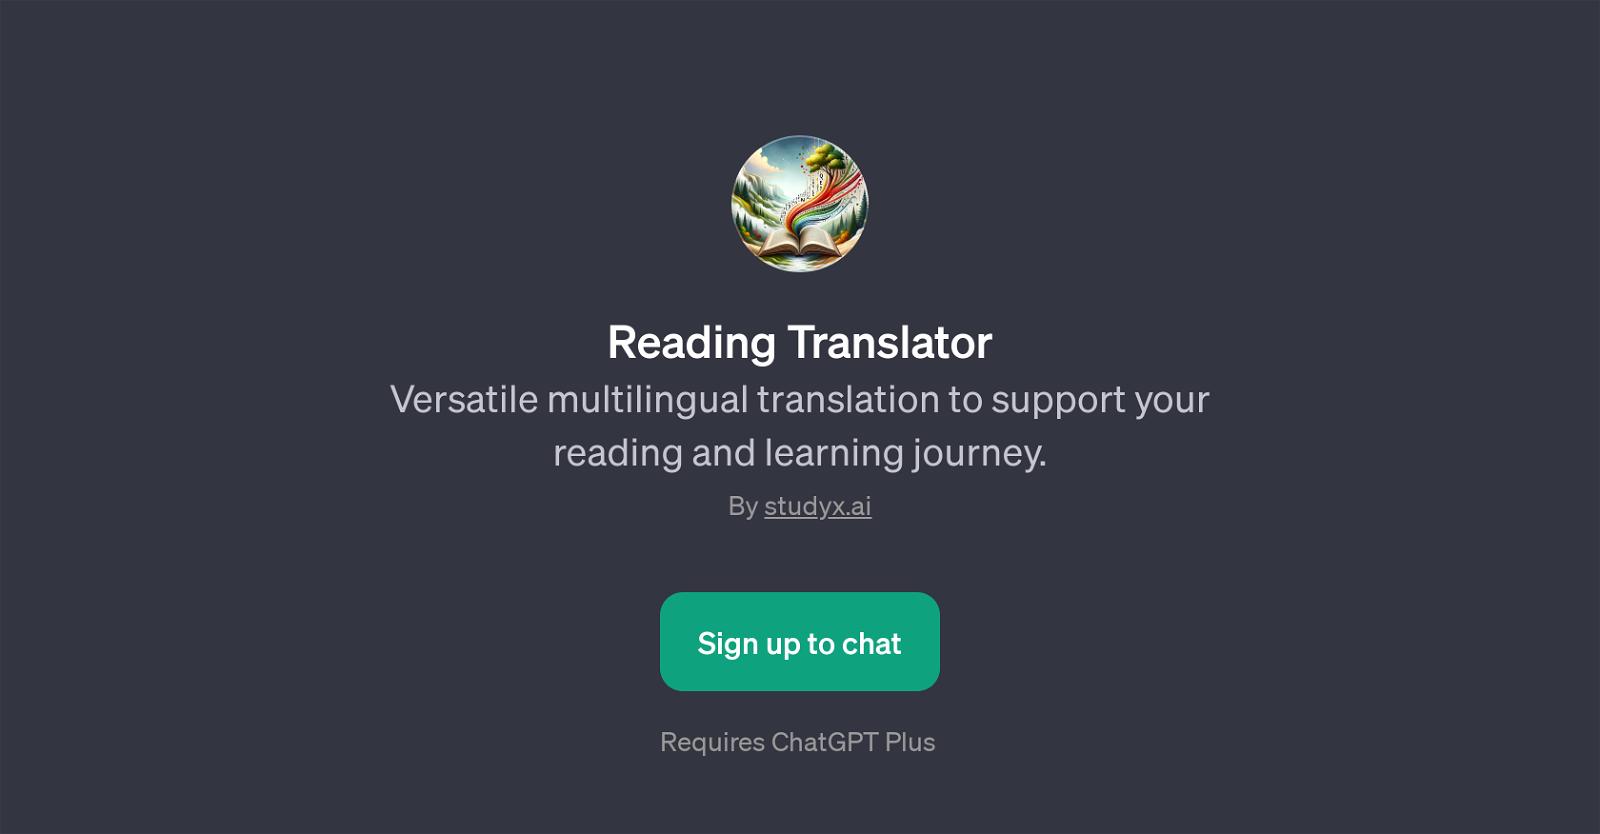 Reading Translator website